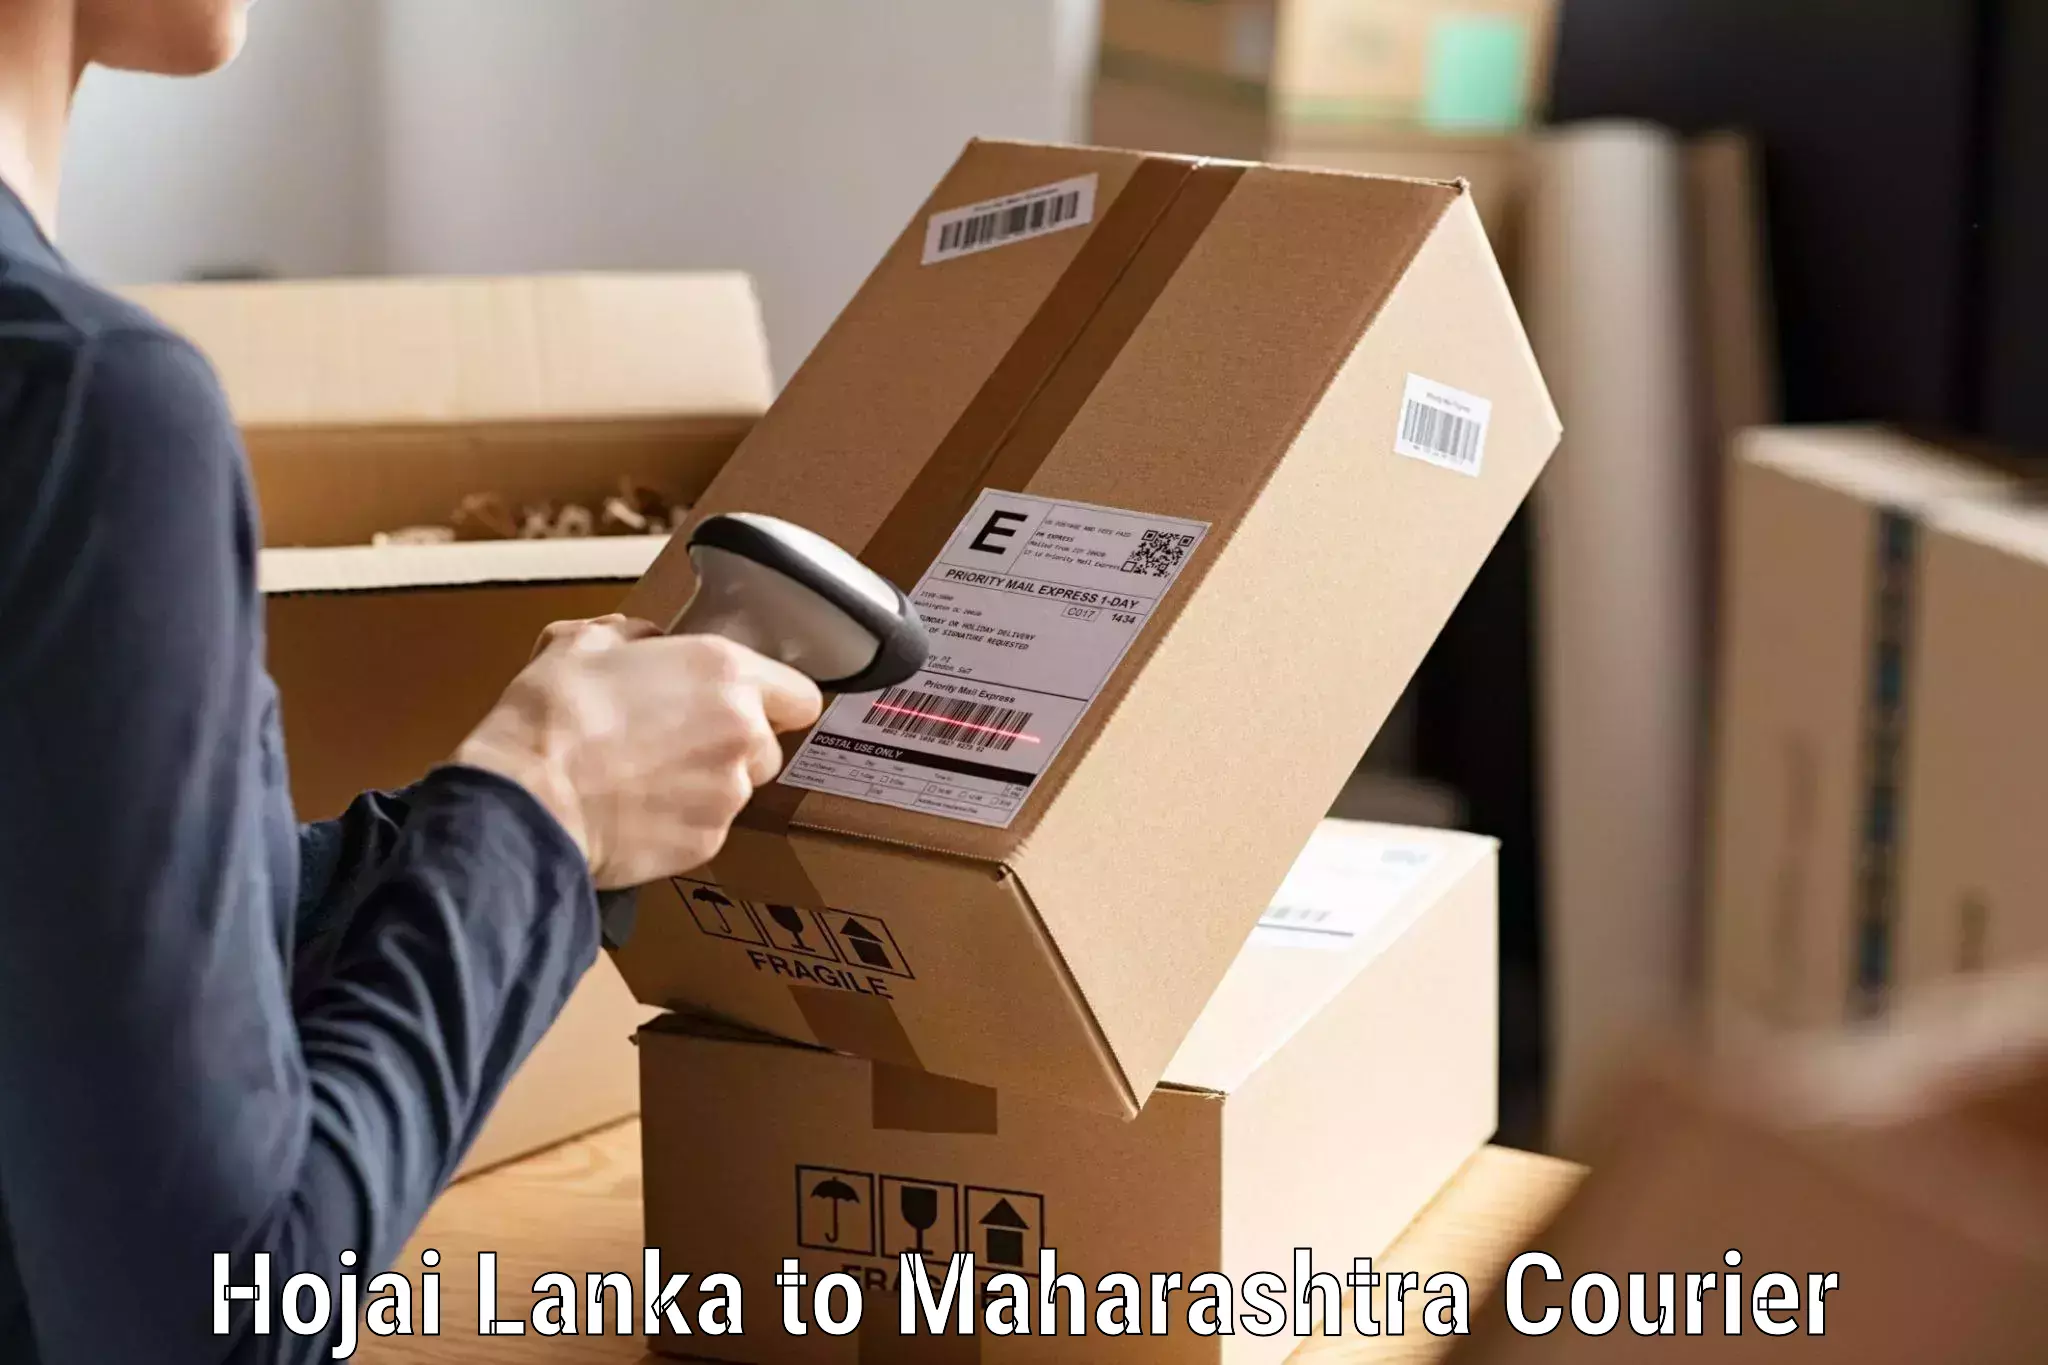 Courier tracking online Hojai Lanka to Worli